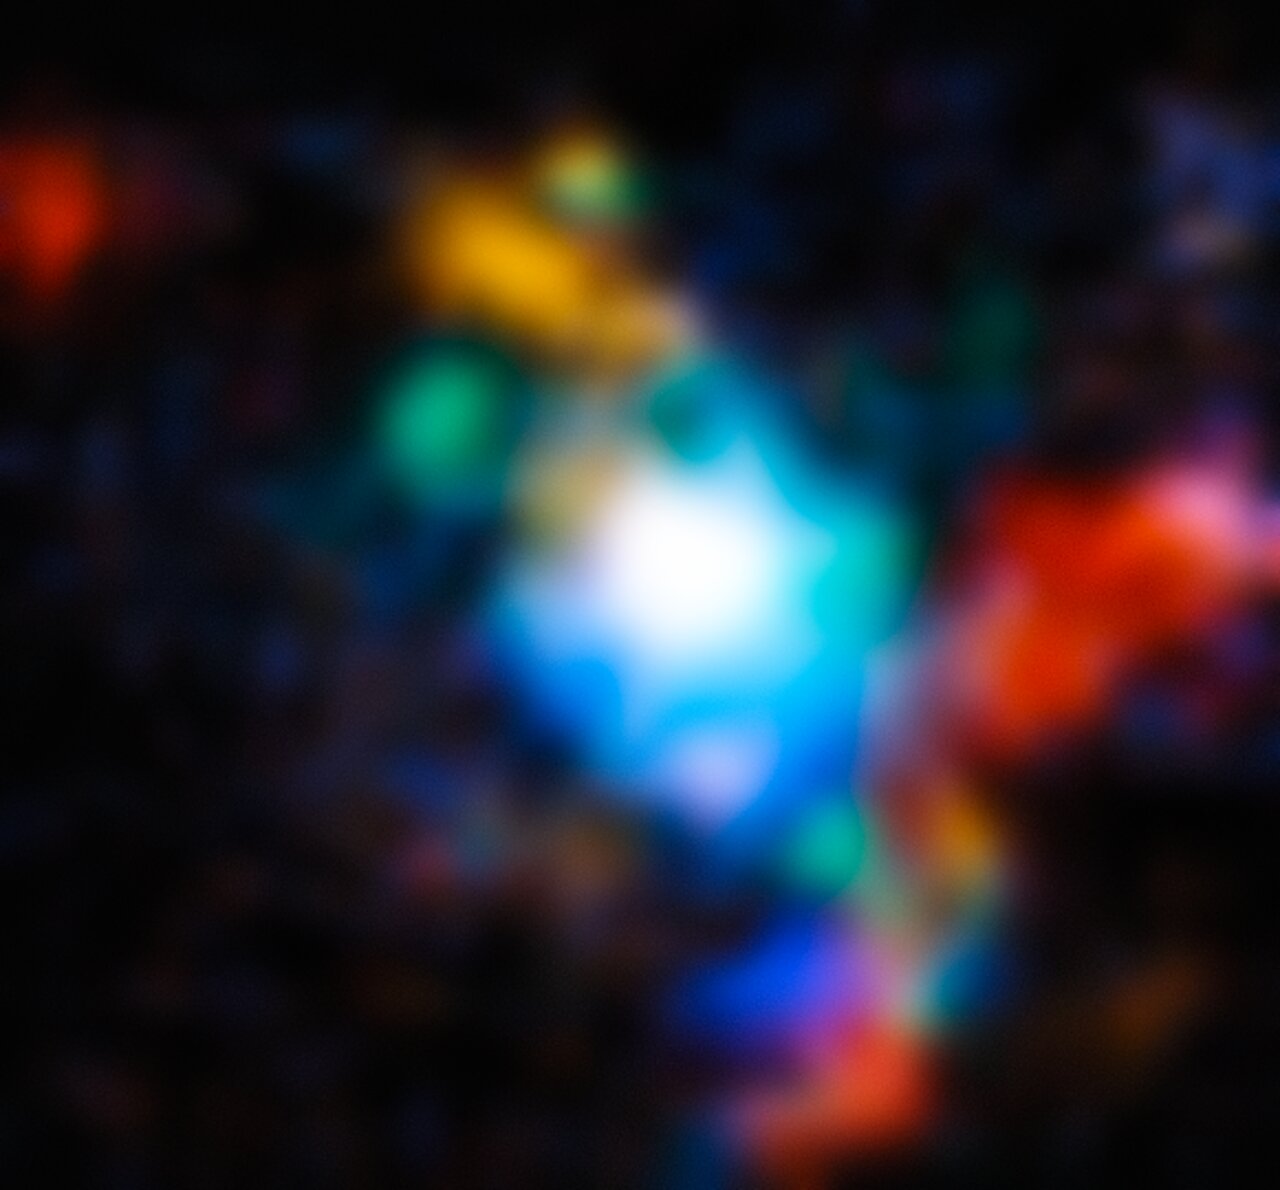 quasar SDSS J165202.64+172852.3